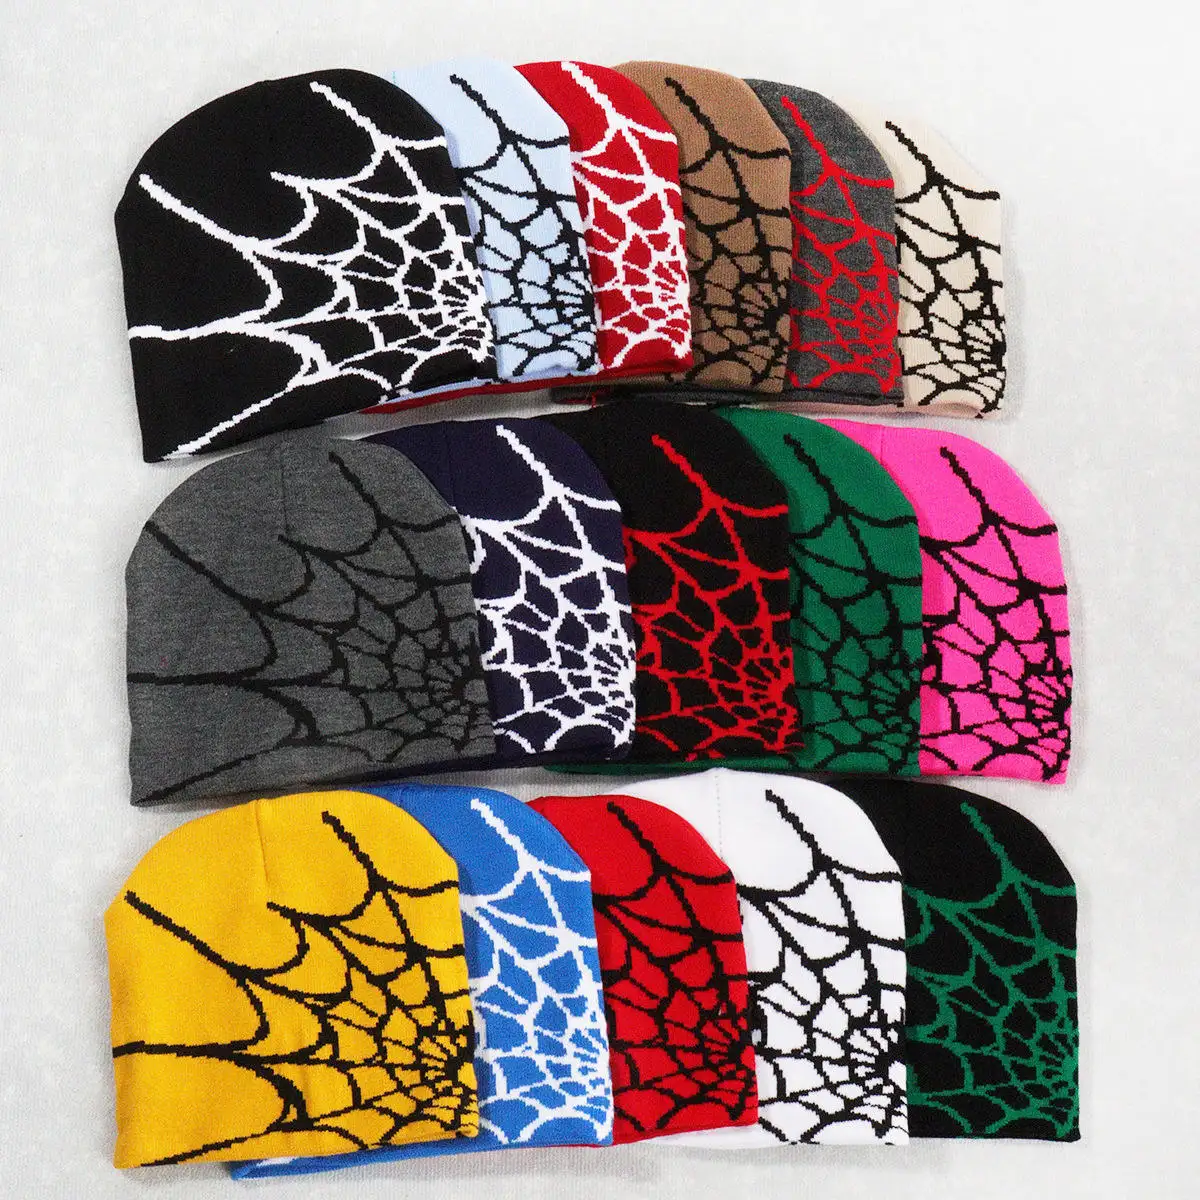 फैशन उच्च गुणवत्ता स्पाइडर वेब पैटर्न कस्टम रंग शीतकालीन बेनी टोपी कफलेस गॉथिक जैक्वार्ड बुना हुआ बेनी